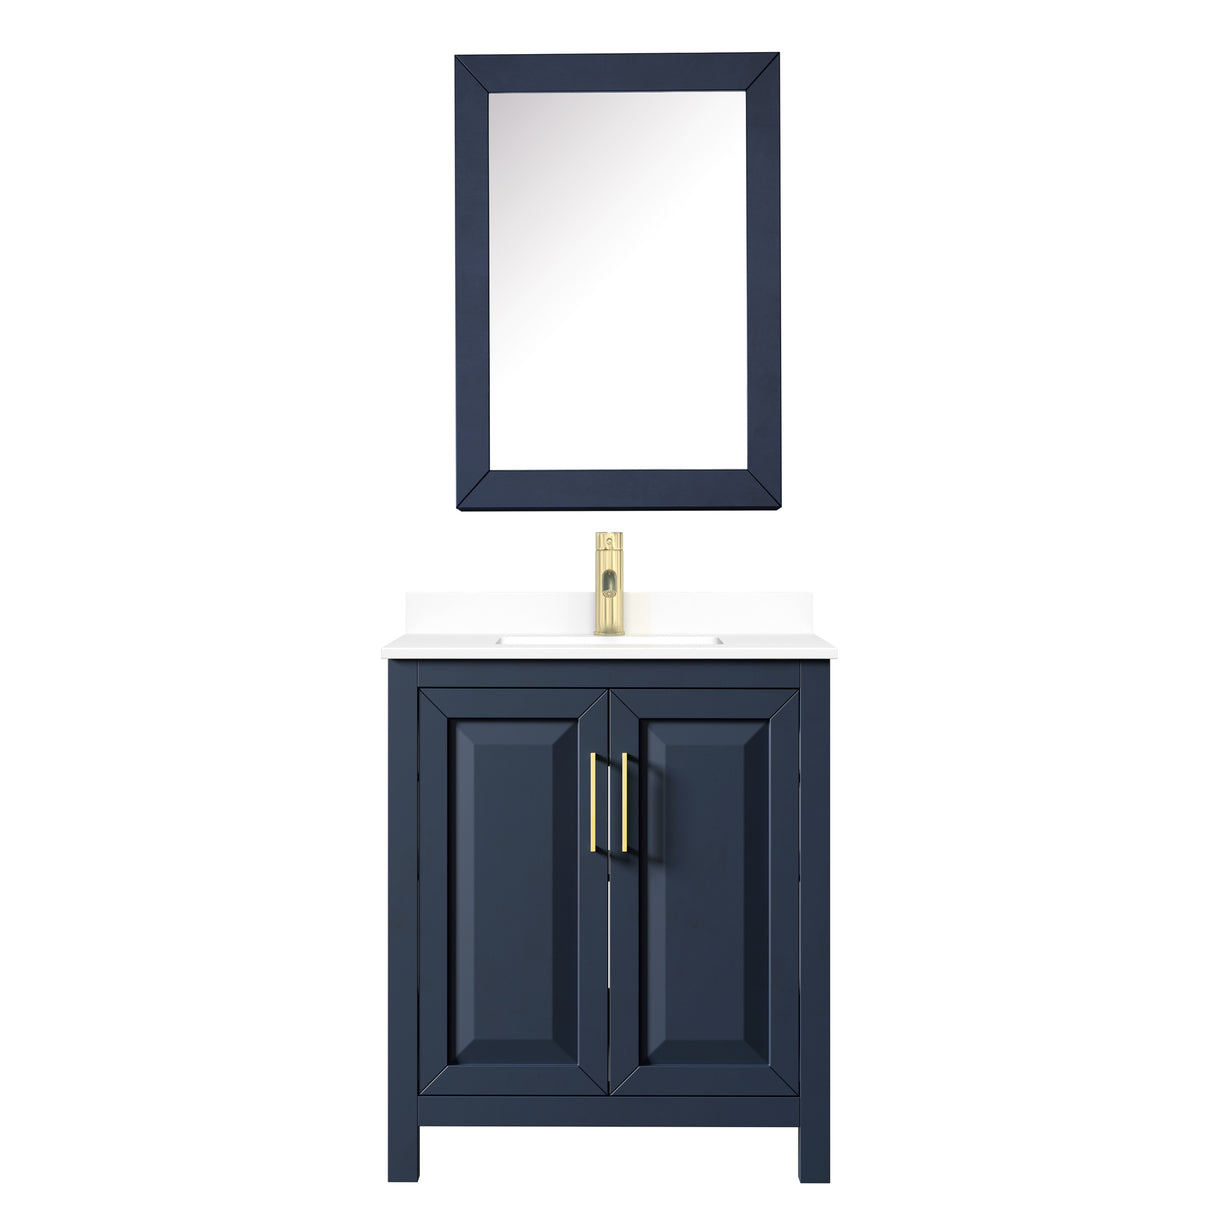 Daria 30 Inch Single Bathroom Vanity in Dark Blue White Cultured Marble Countertop Undermount Square Sink Medicine Cabinet